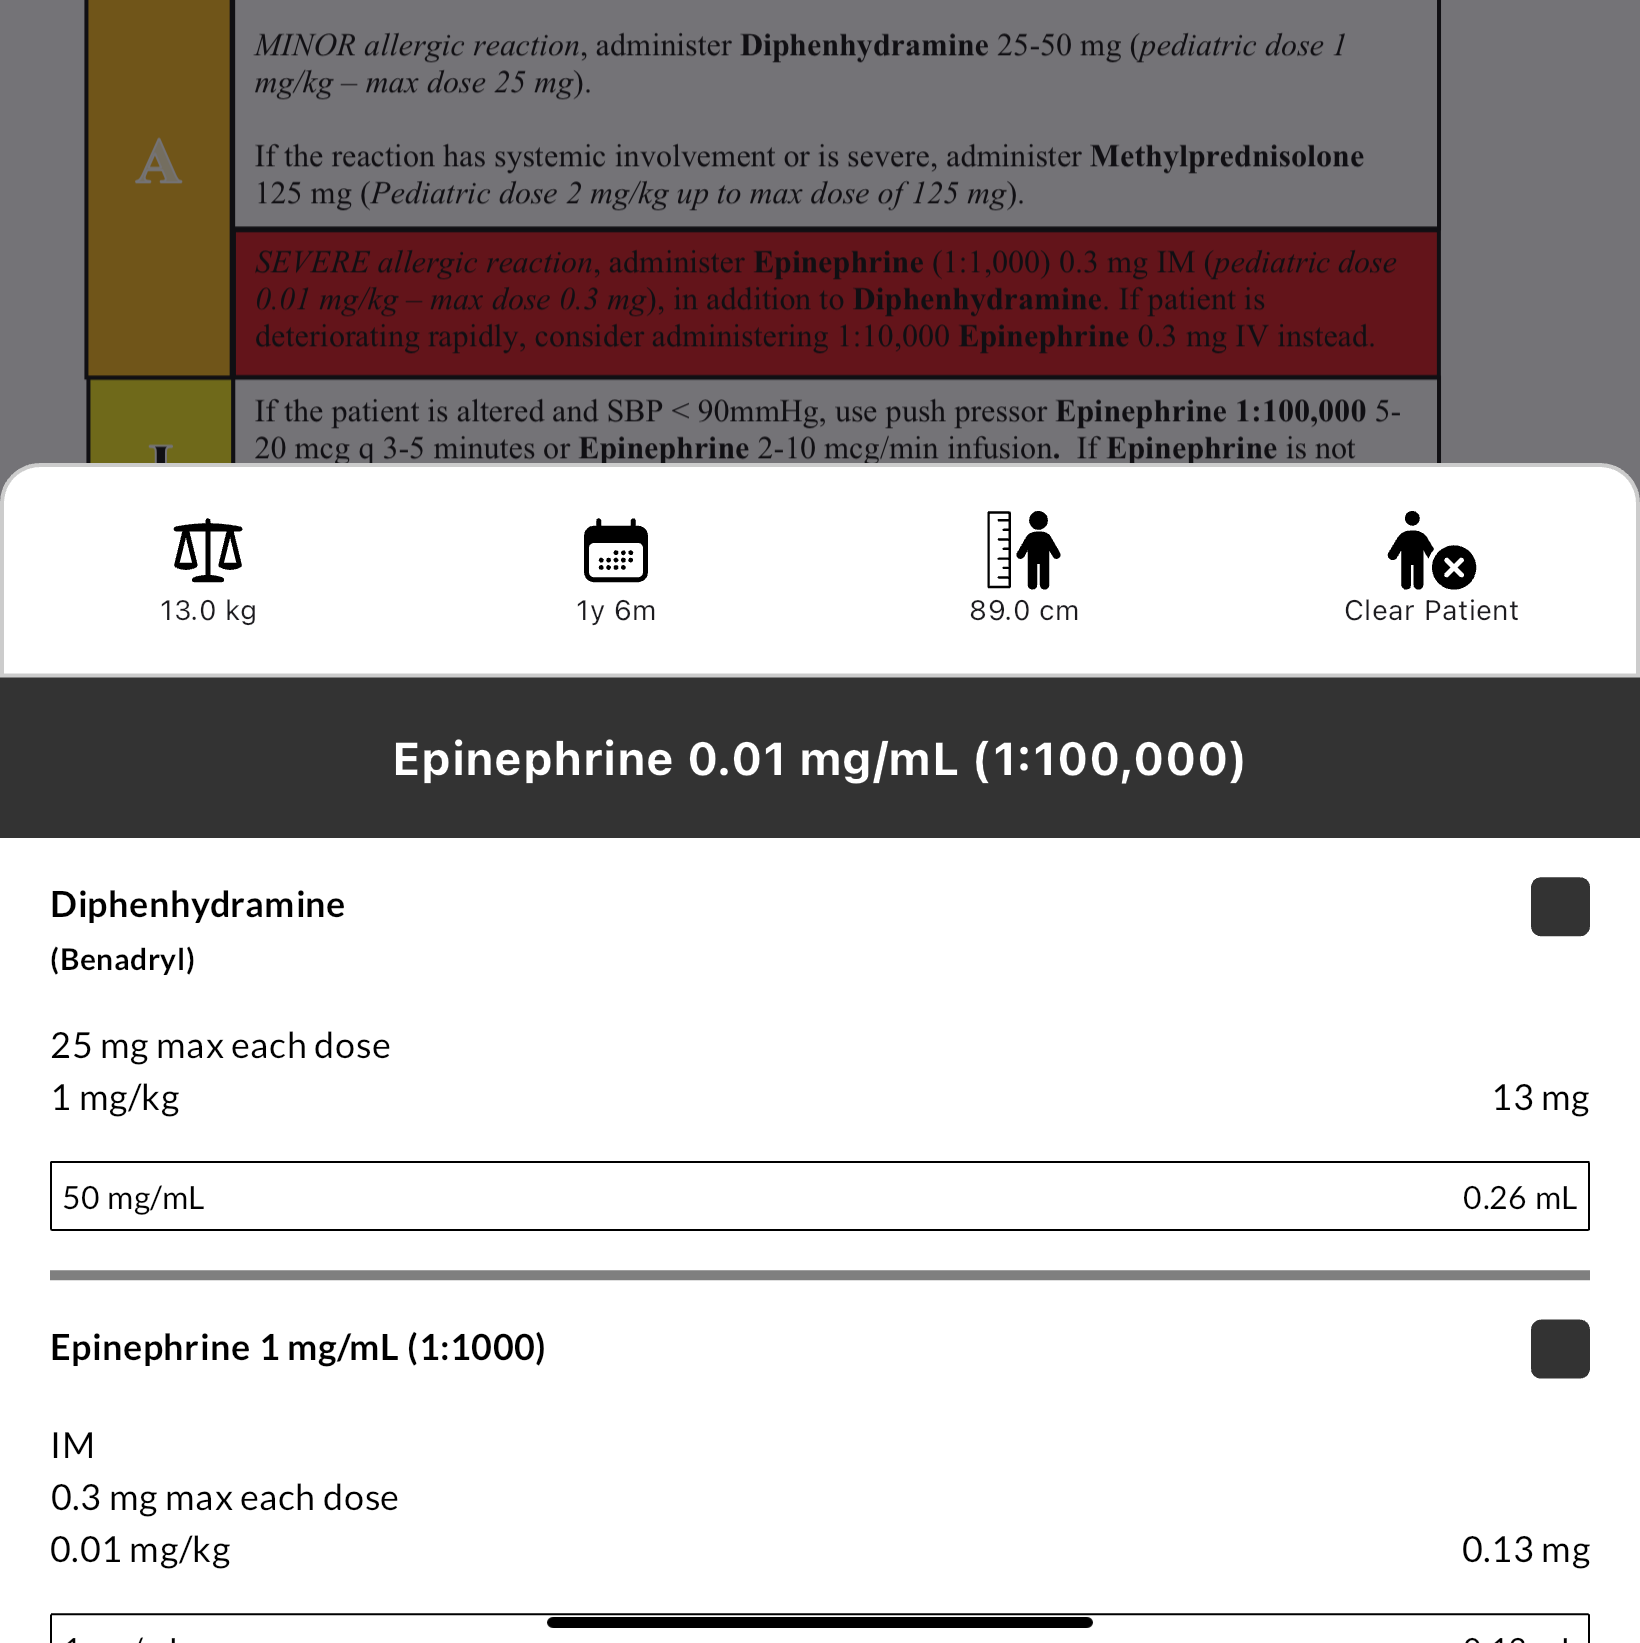 Same dosage calculator screen for Epinephrine 0.01 mg/mL